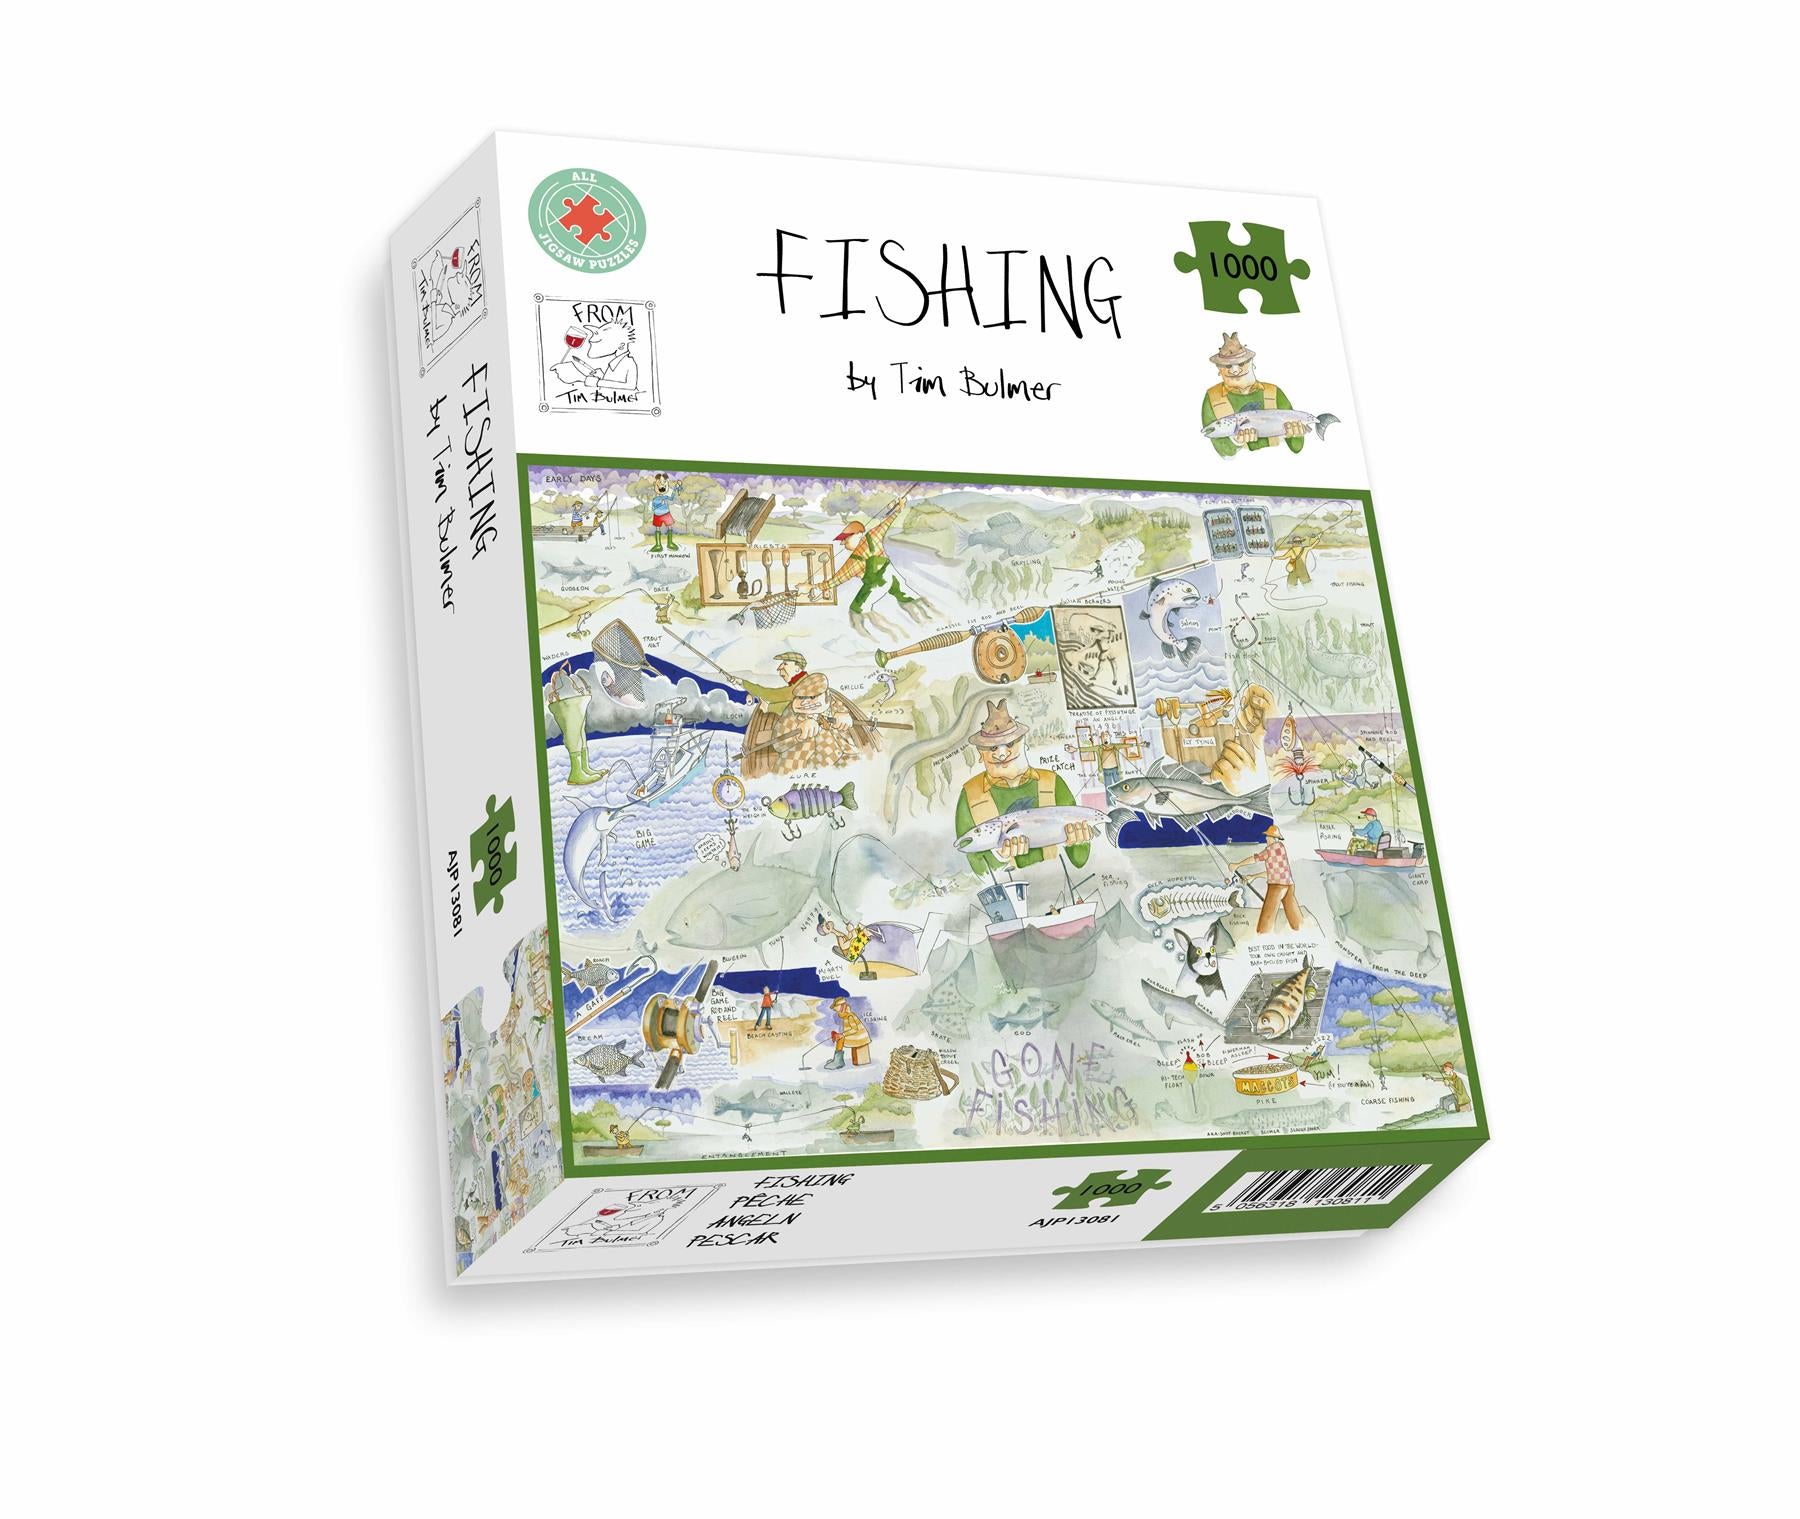 Fishing - Tim Bulmer 1000 Piece Jigsaw Puzzle – All Jigsaw Puzzles